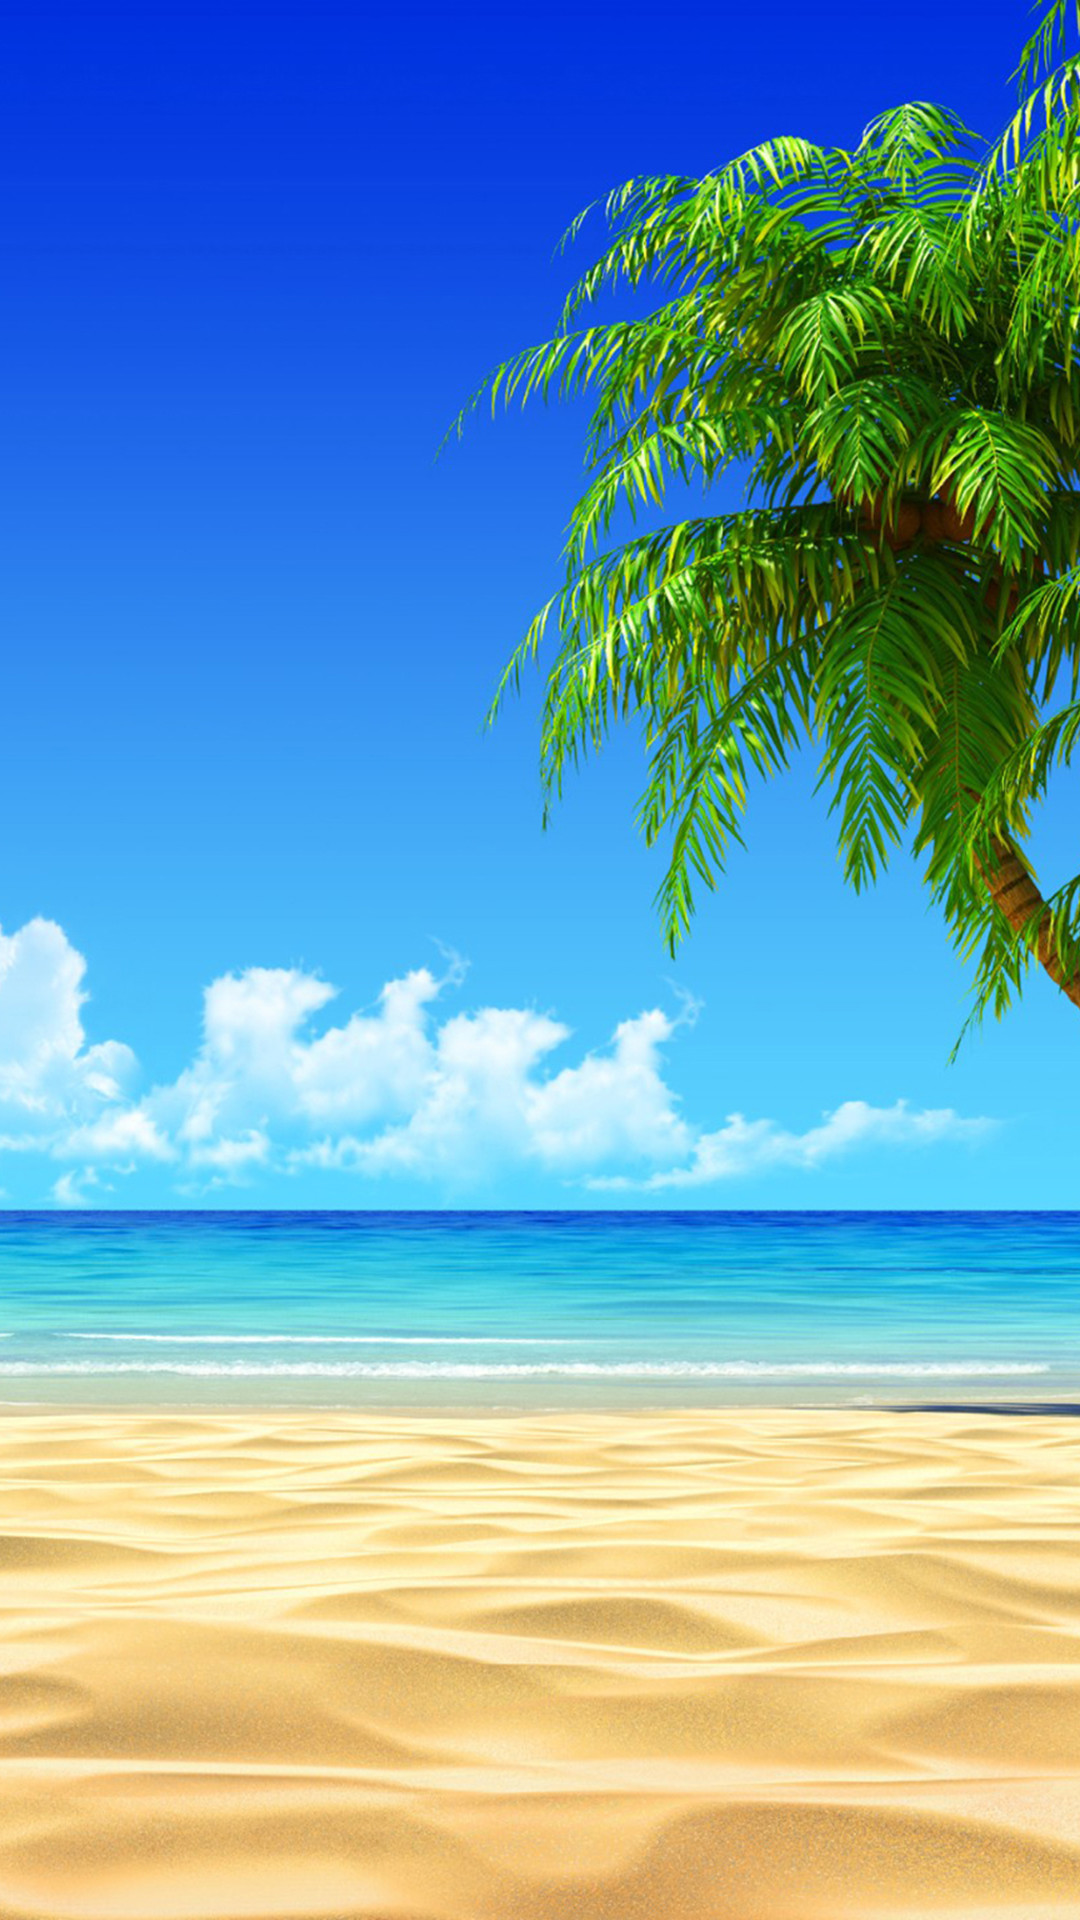 1080x1920 Summer Wallpaper, Beach Wallpaper, Cool Wallpaper, Nature Wallpaper,  Barbados Beaches, Tropical Beaches, Sandy Beaches, Bora Bora Beach, Bahamas  Beach